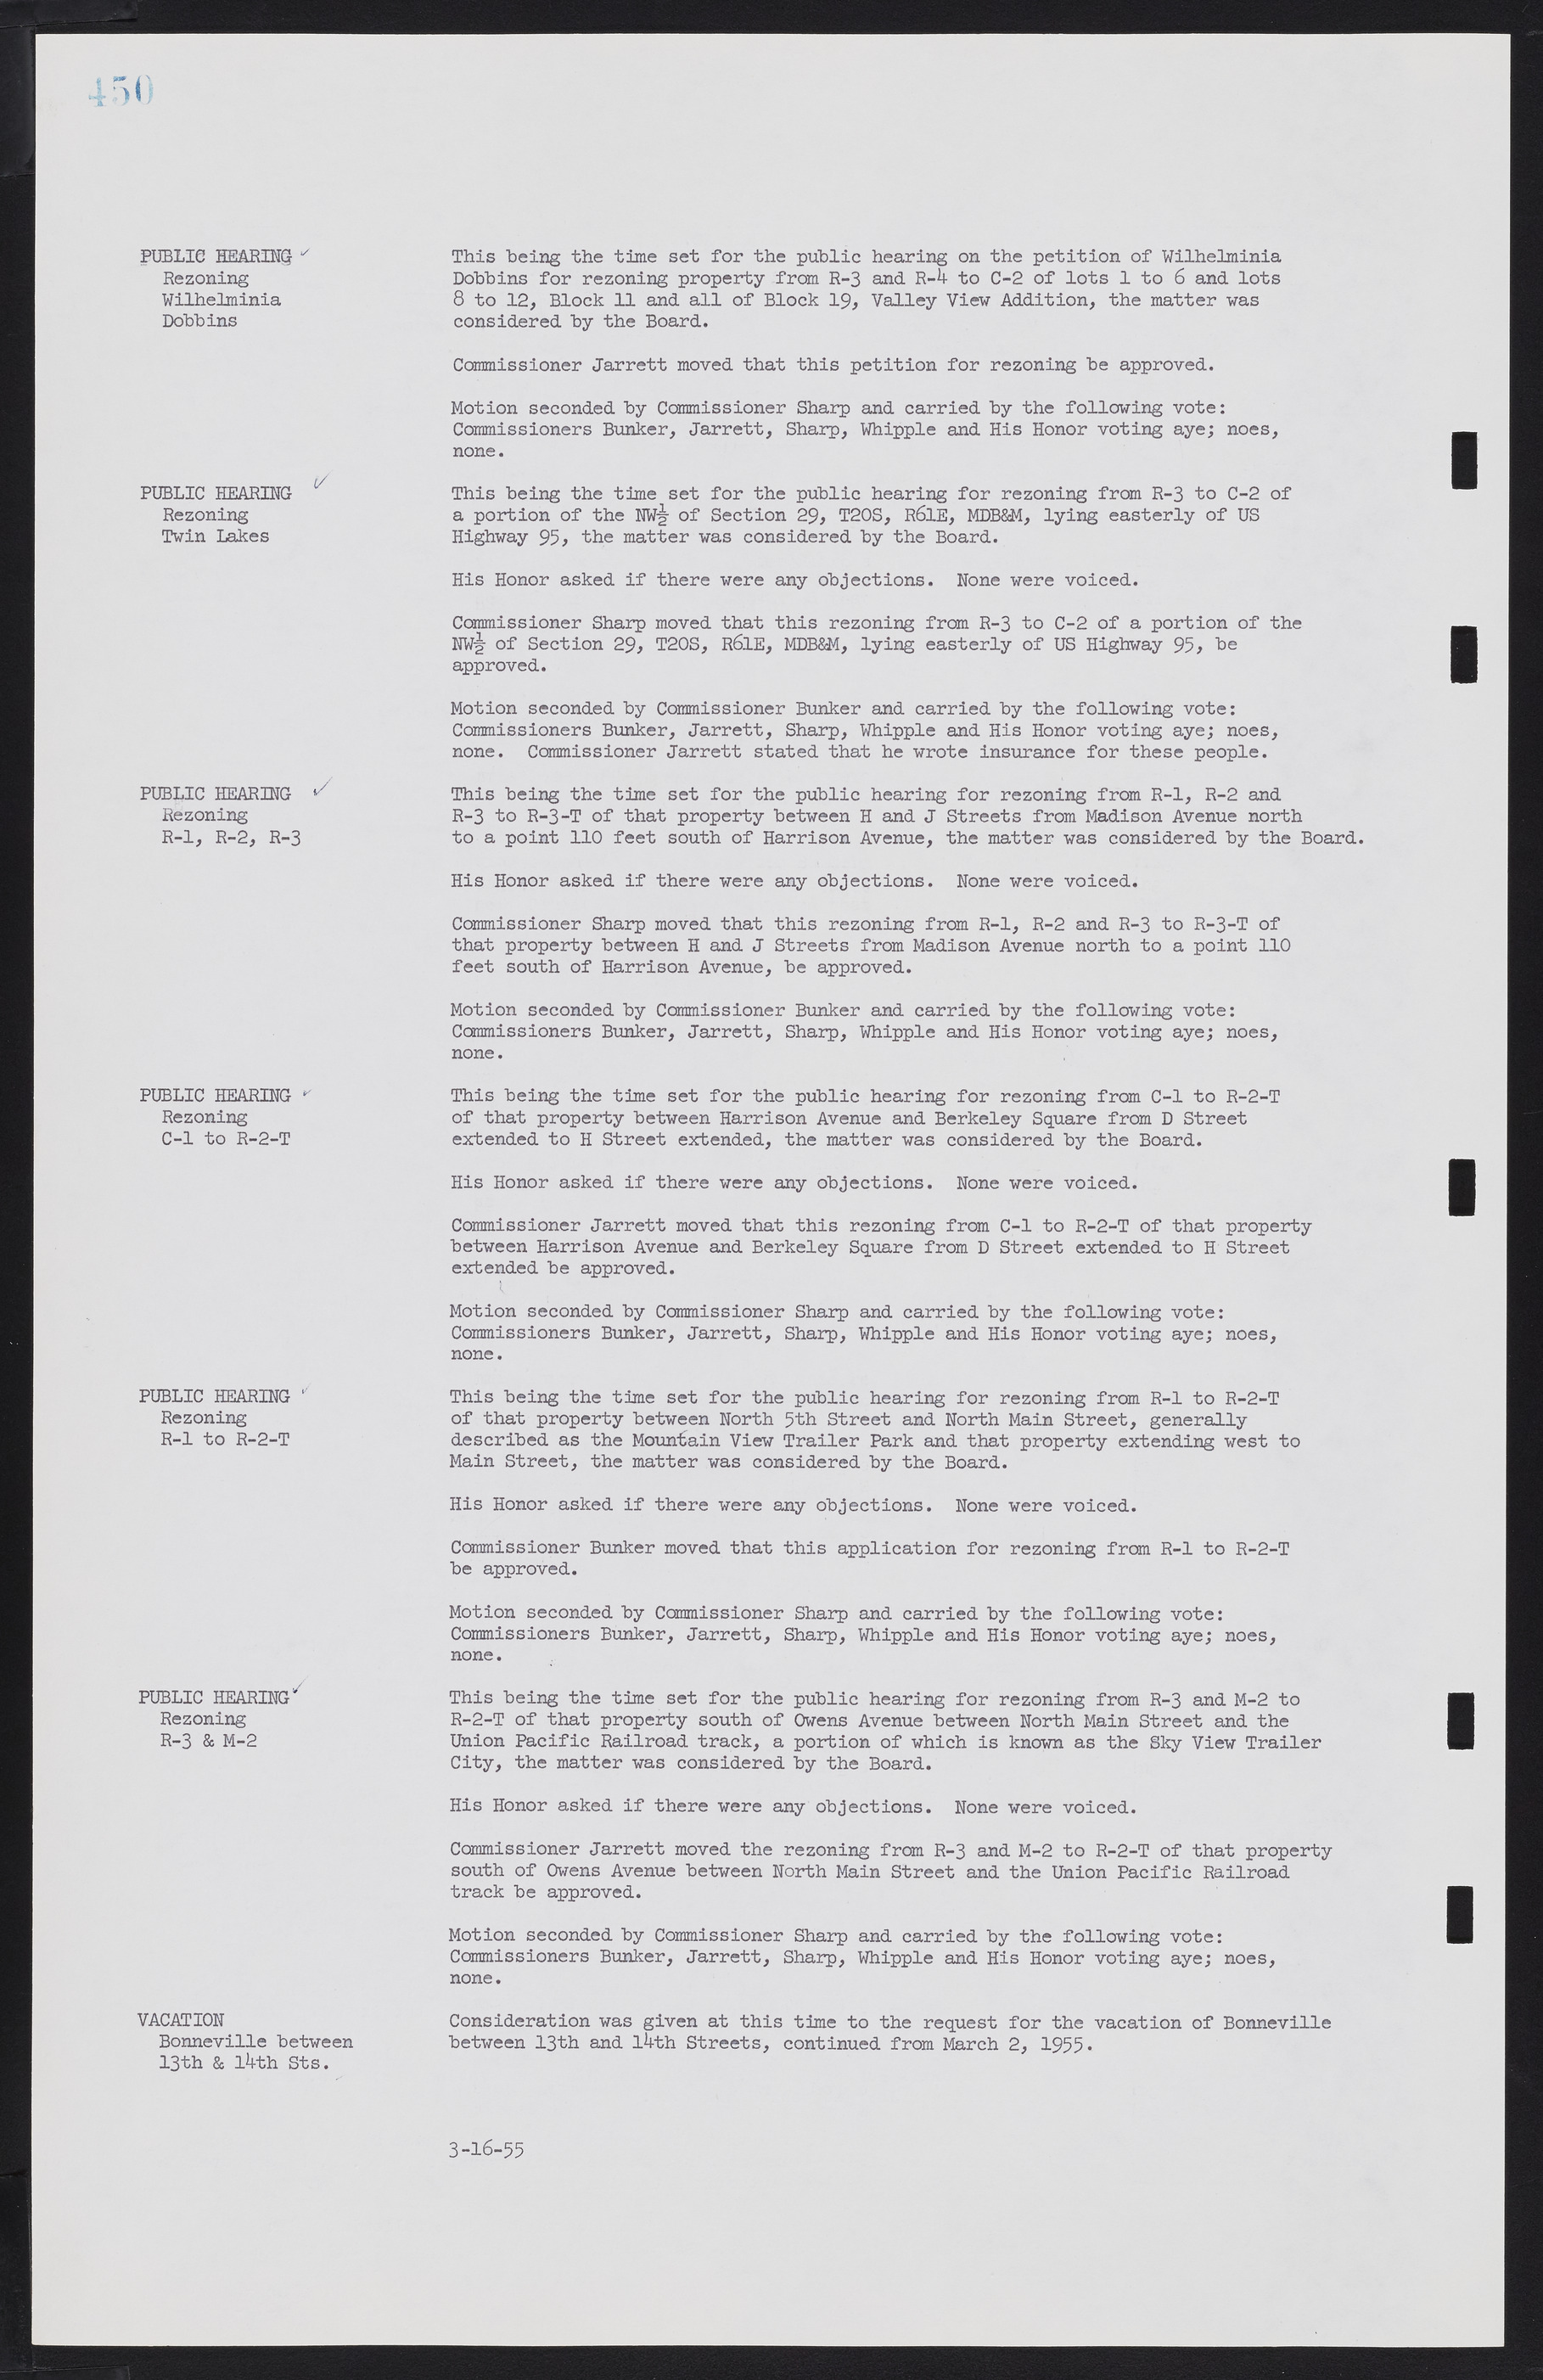 Las Vegas City Commission Minutes, February 17, 1954 to September 21, 1955, lvc000009-456